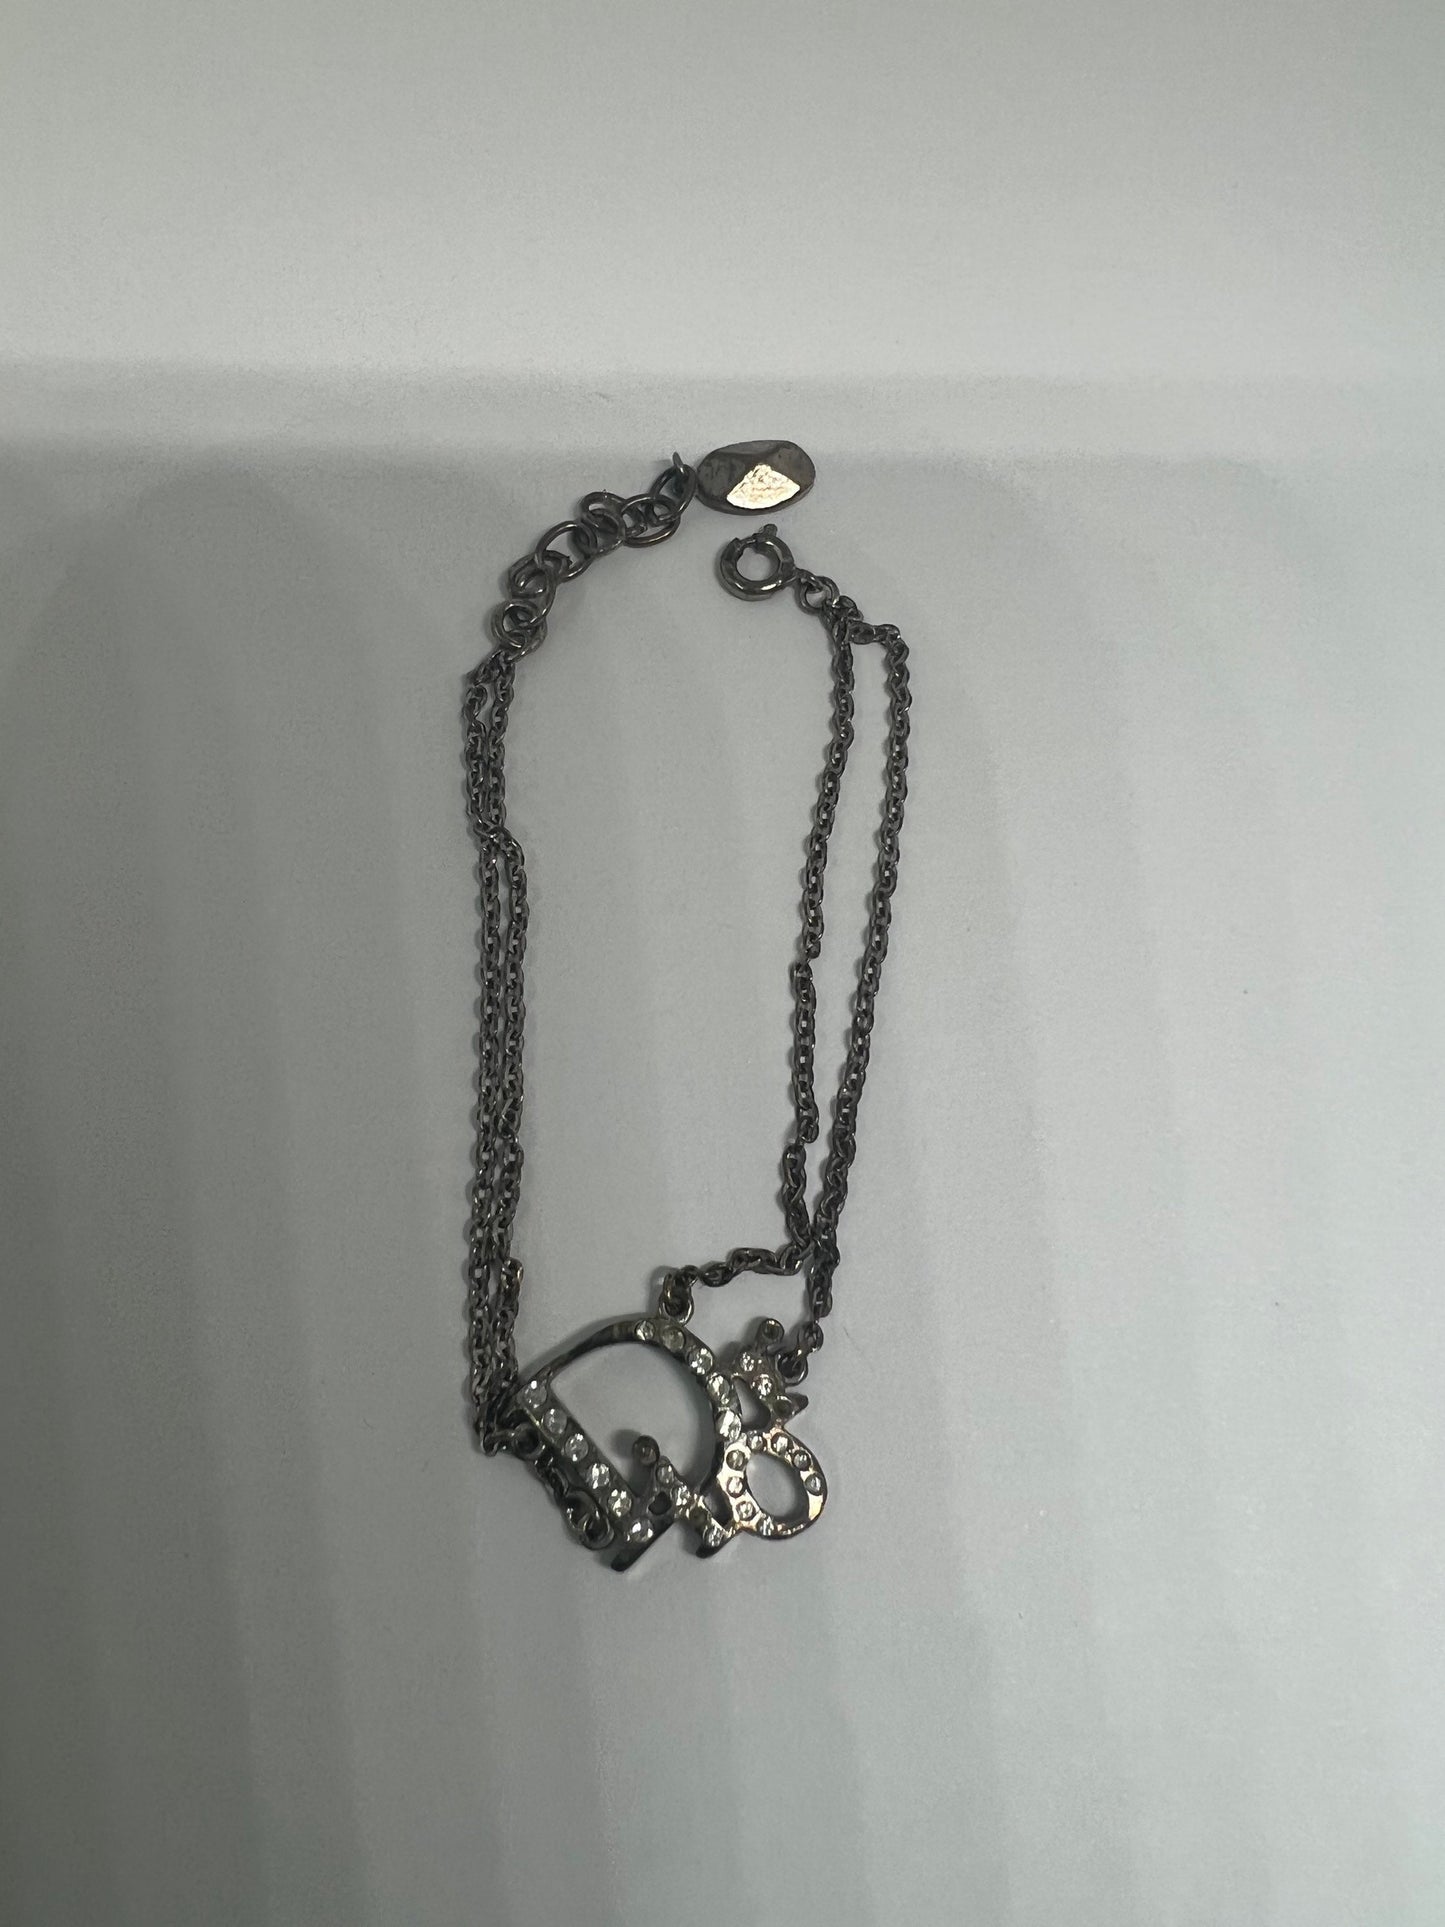 Dior silver bracelet 7cmx 15cm B14 19 Apr22